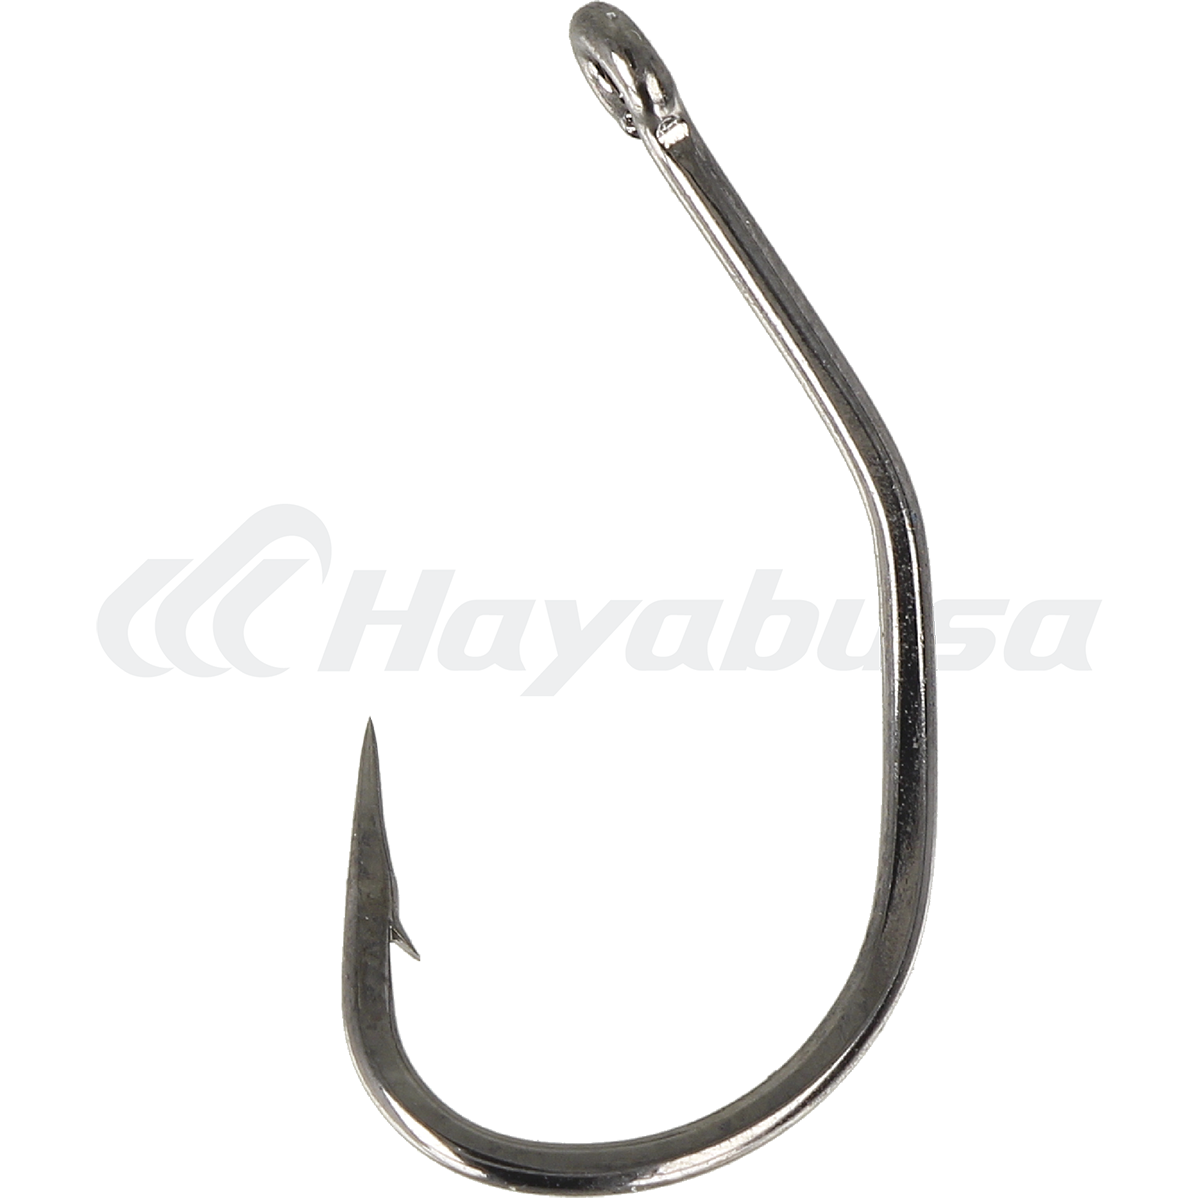 Крючок Hayabusa M-1 №2 (10шт)